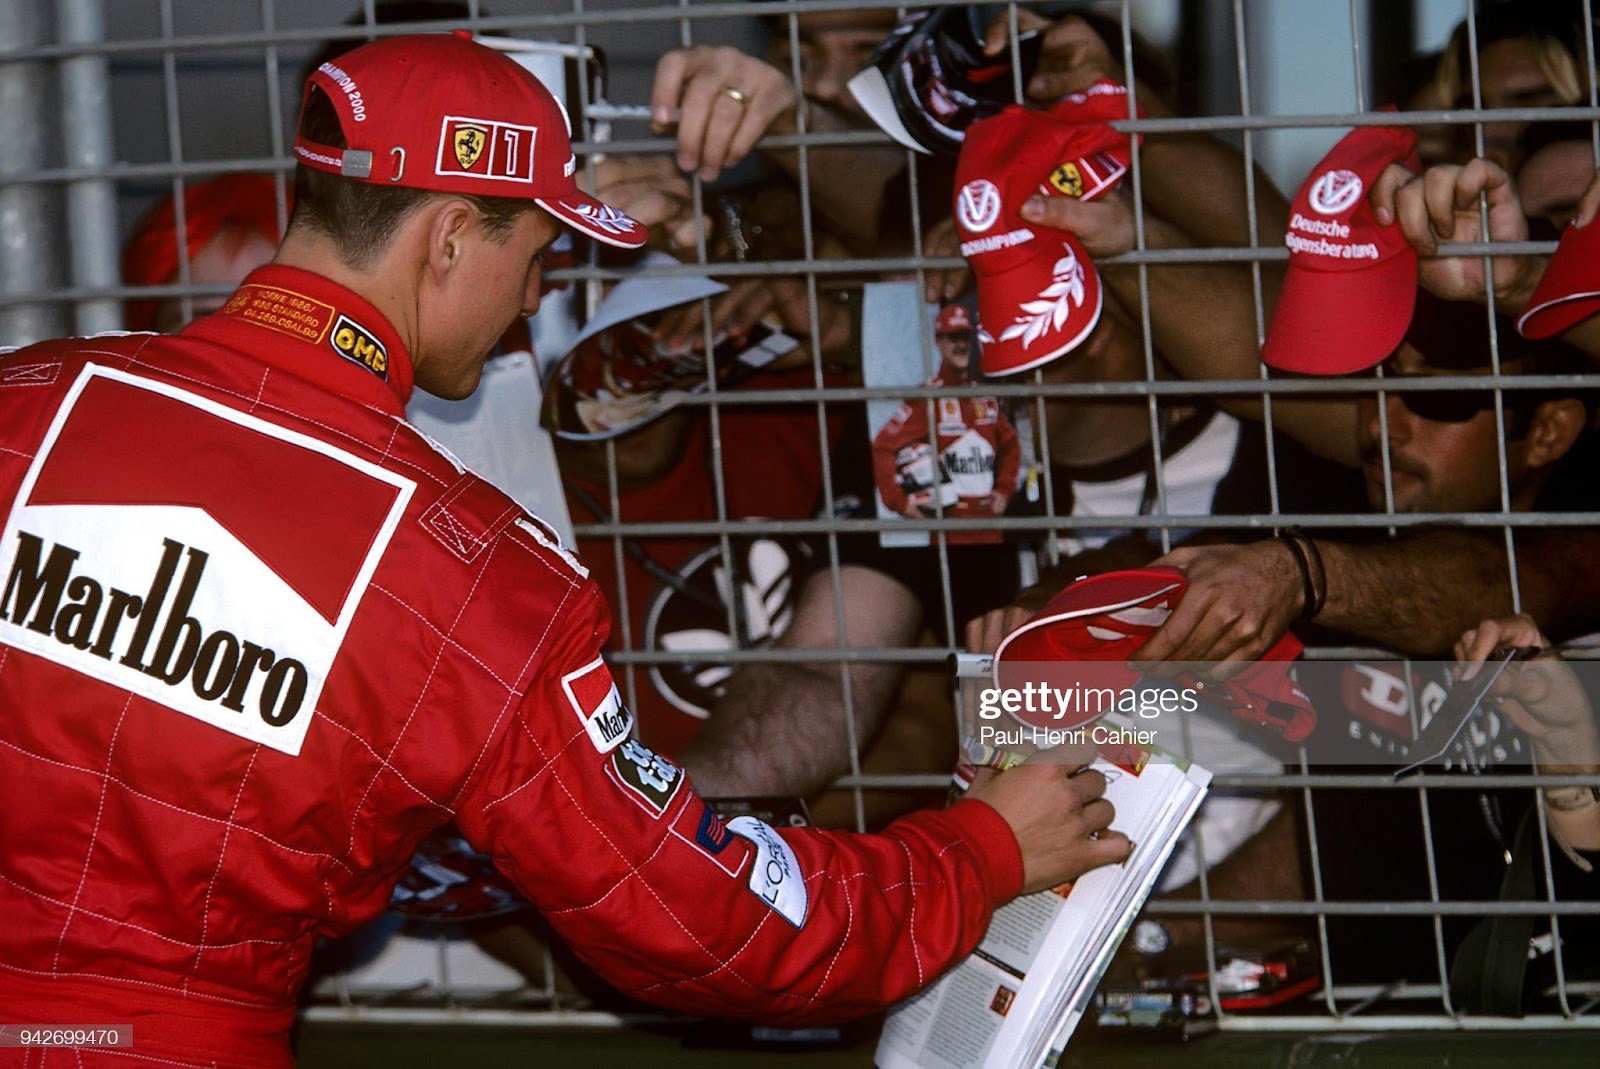 Schumacher signing autographs for the Australian fans.